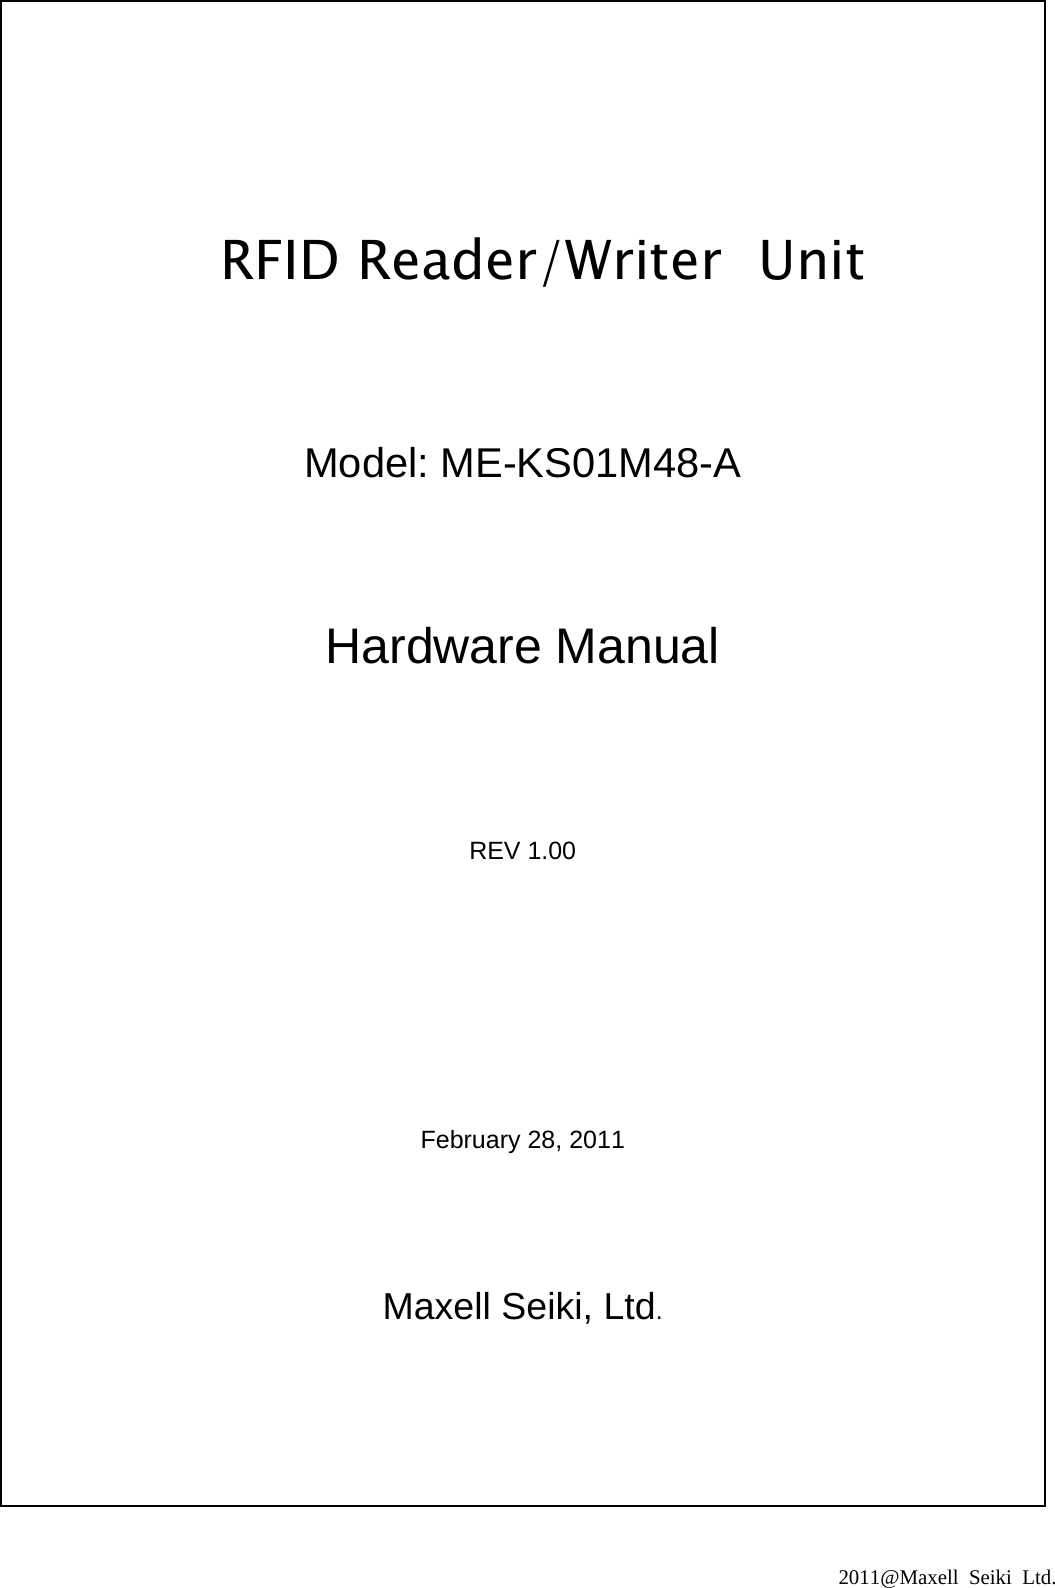                            2011@Maxell Seiki Ltd.                                                                 RFID Reader/Writer Unit       Model: ME-KS01M48-A   Hardware Manual      REV 1.00         February 28, 2011     Maxell Seiki, Ltd.  